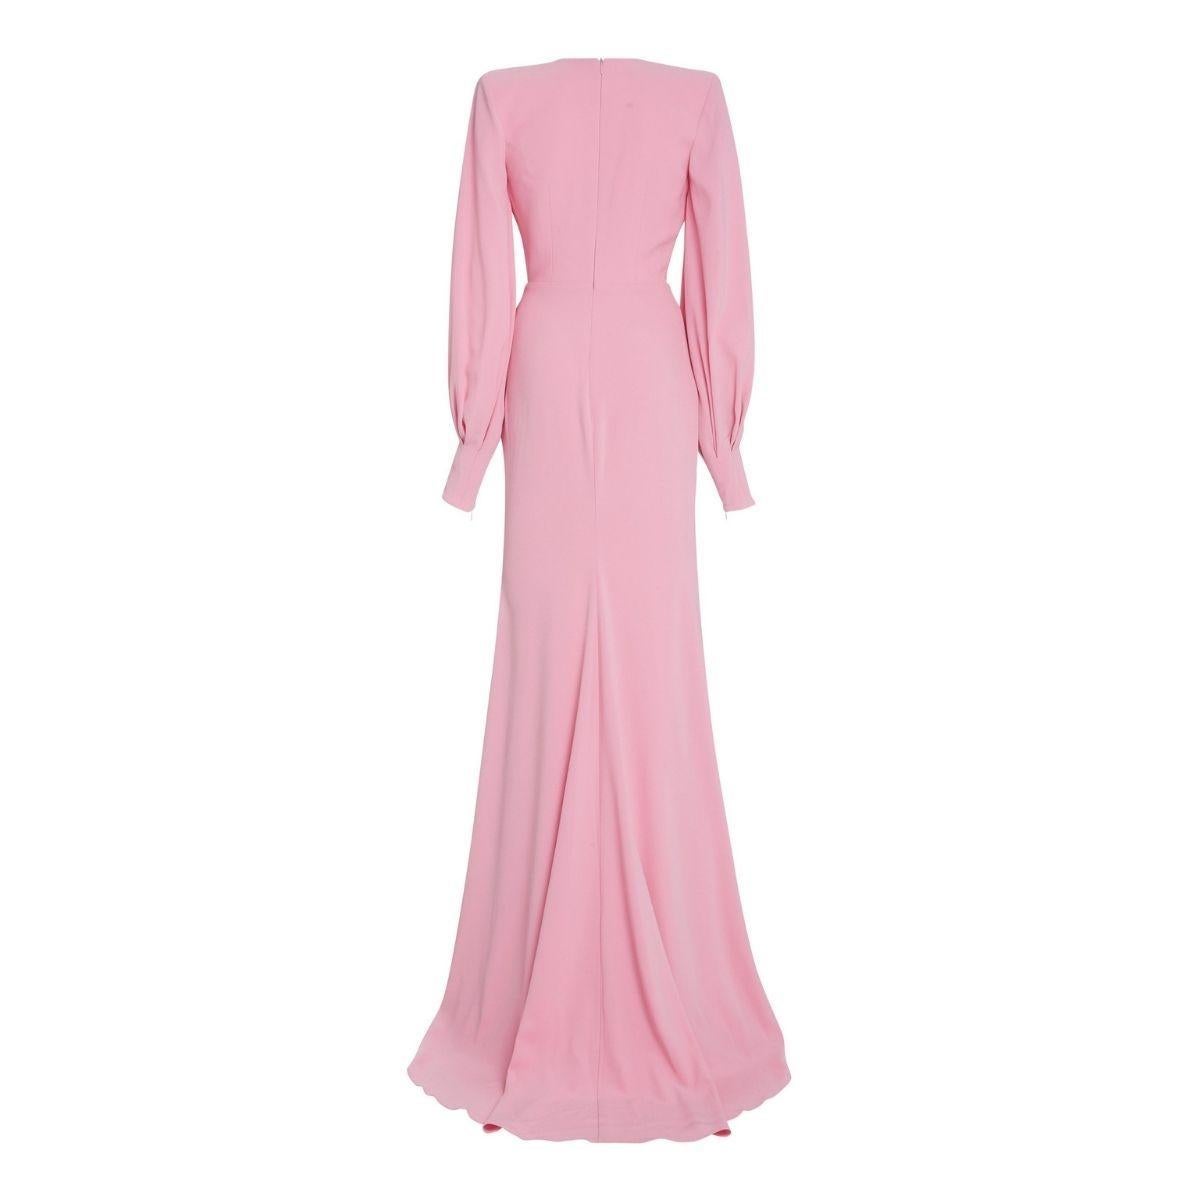 alex perry pink sequin dress